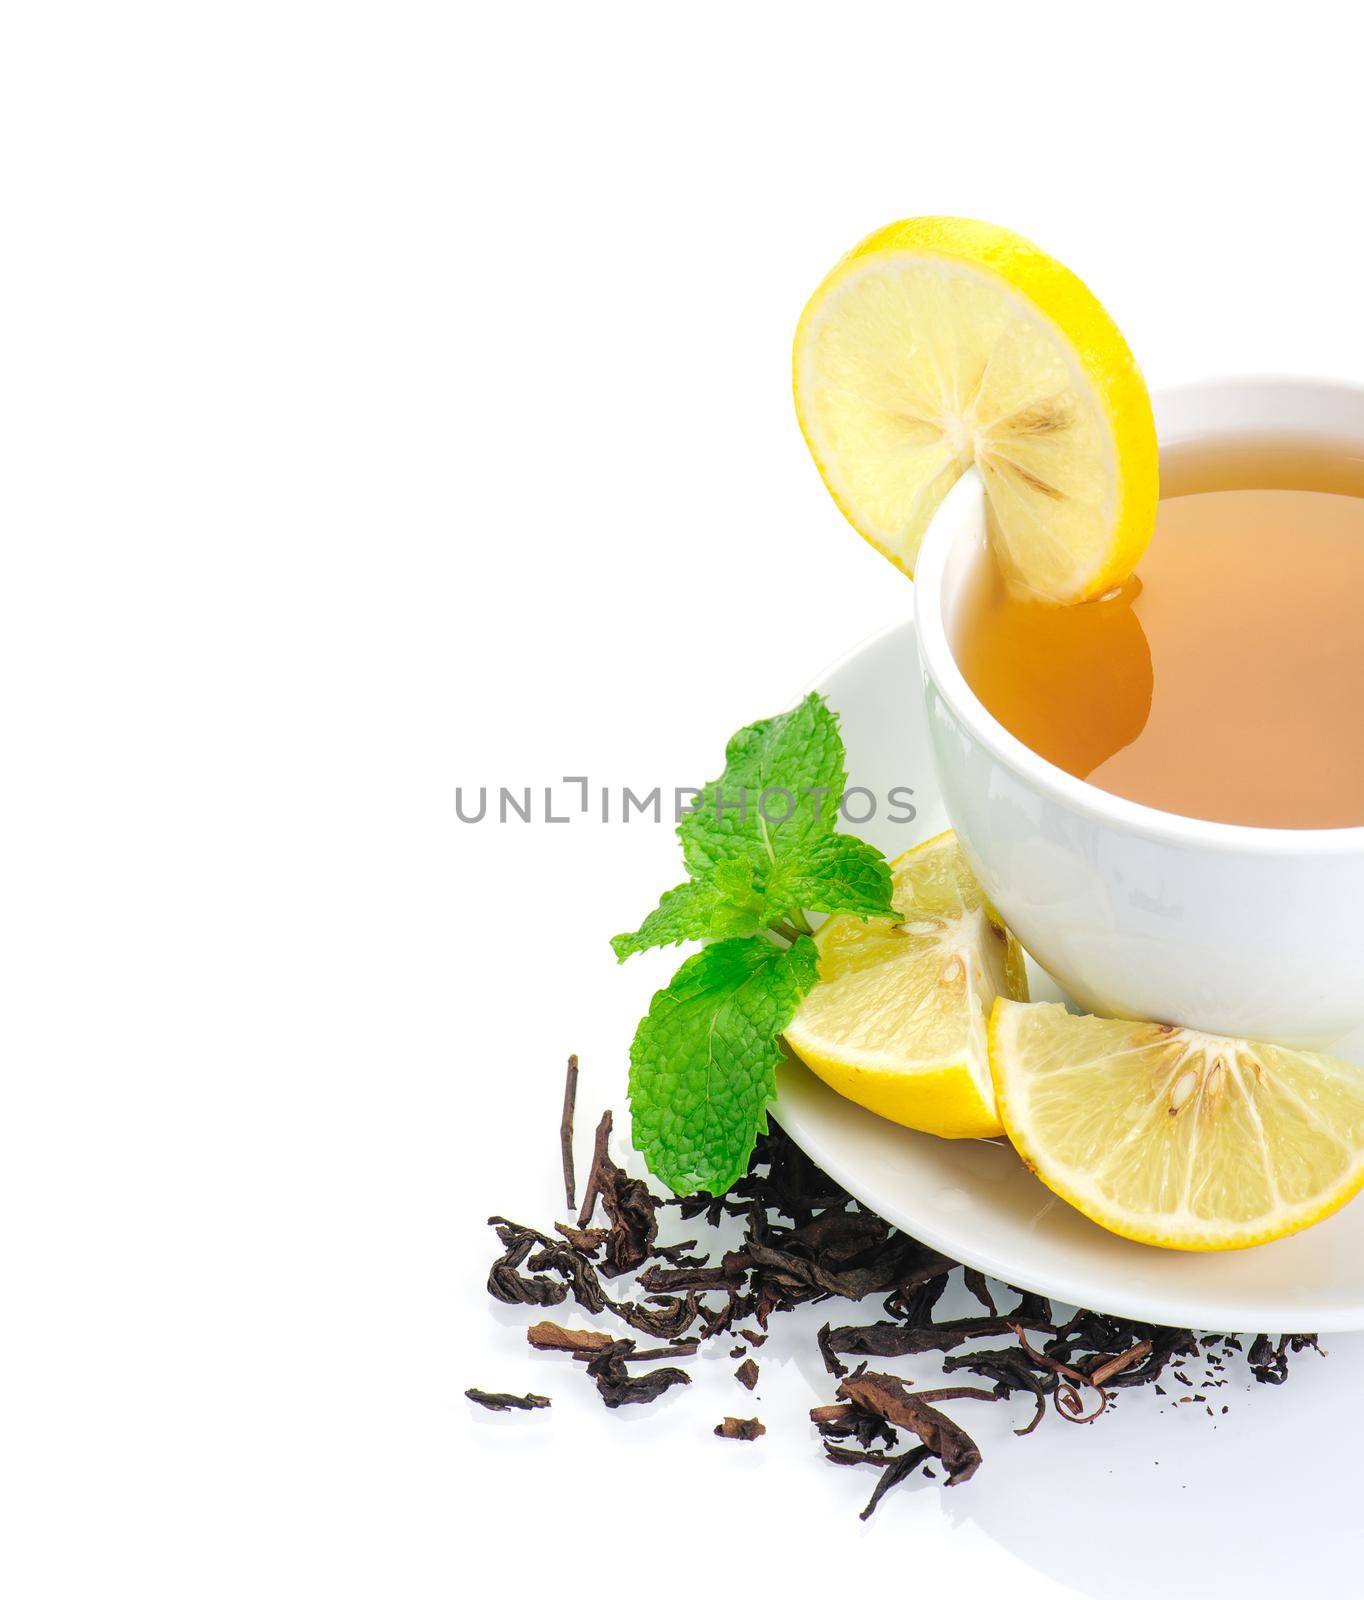 a cup of lemon tea with sliced lemon